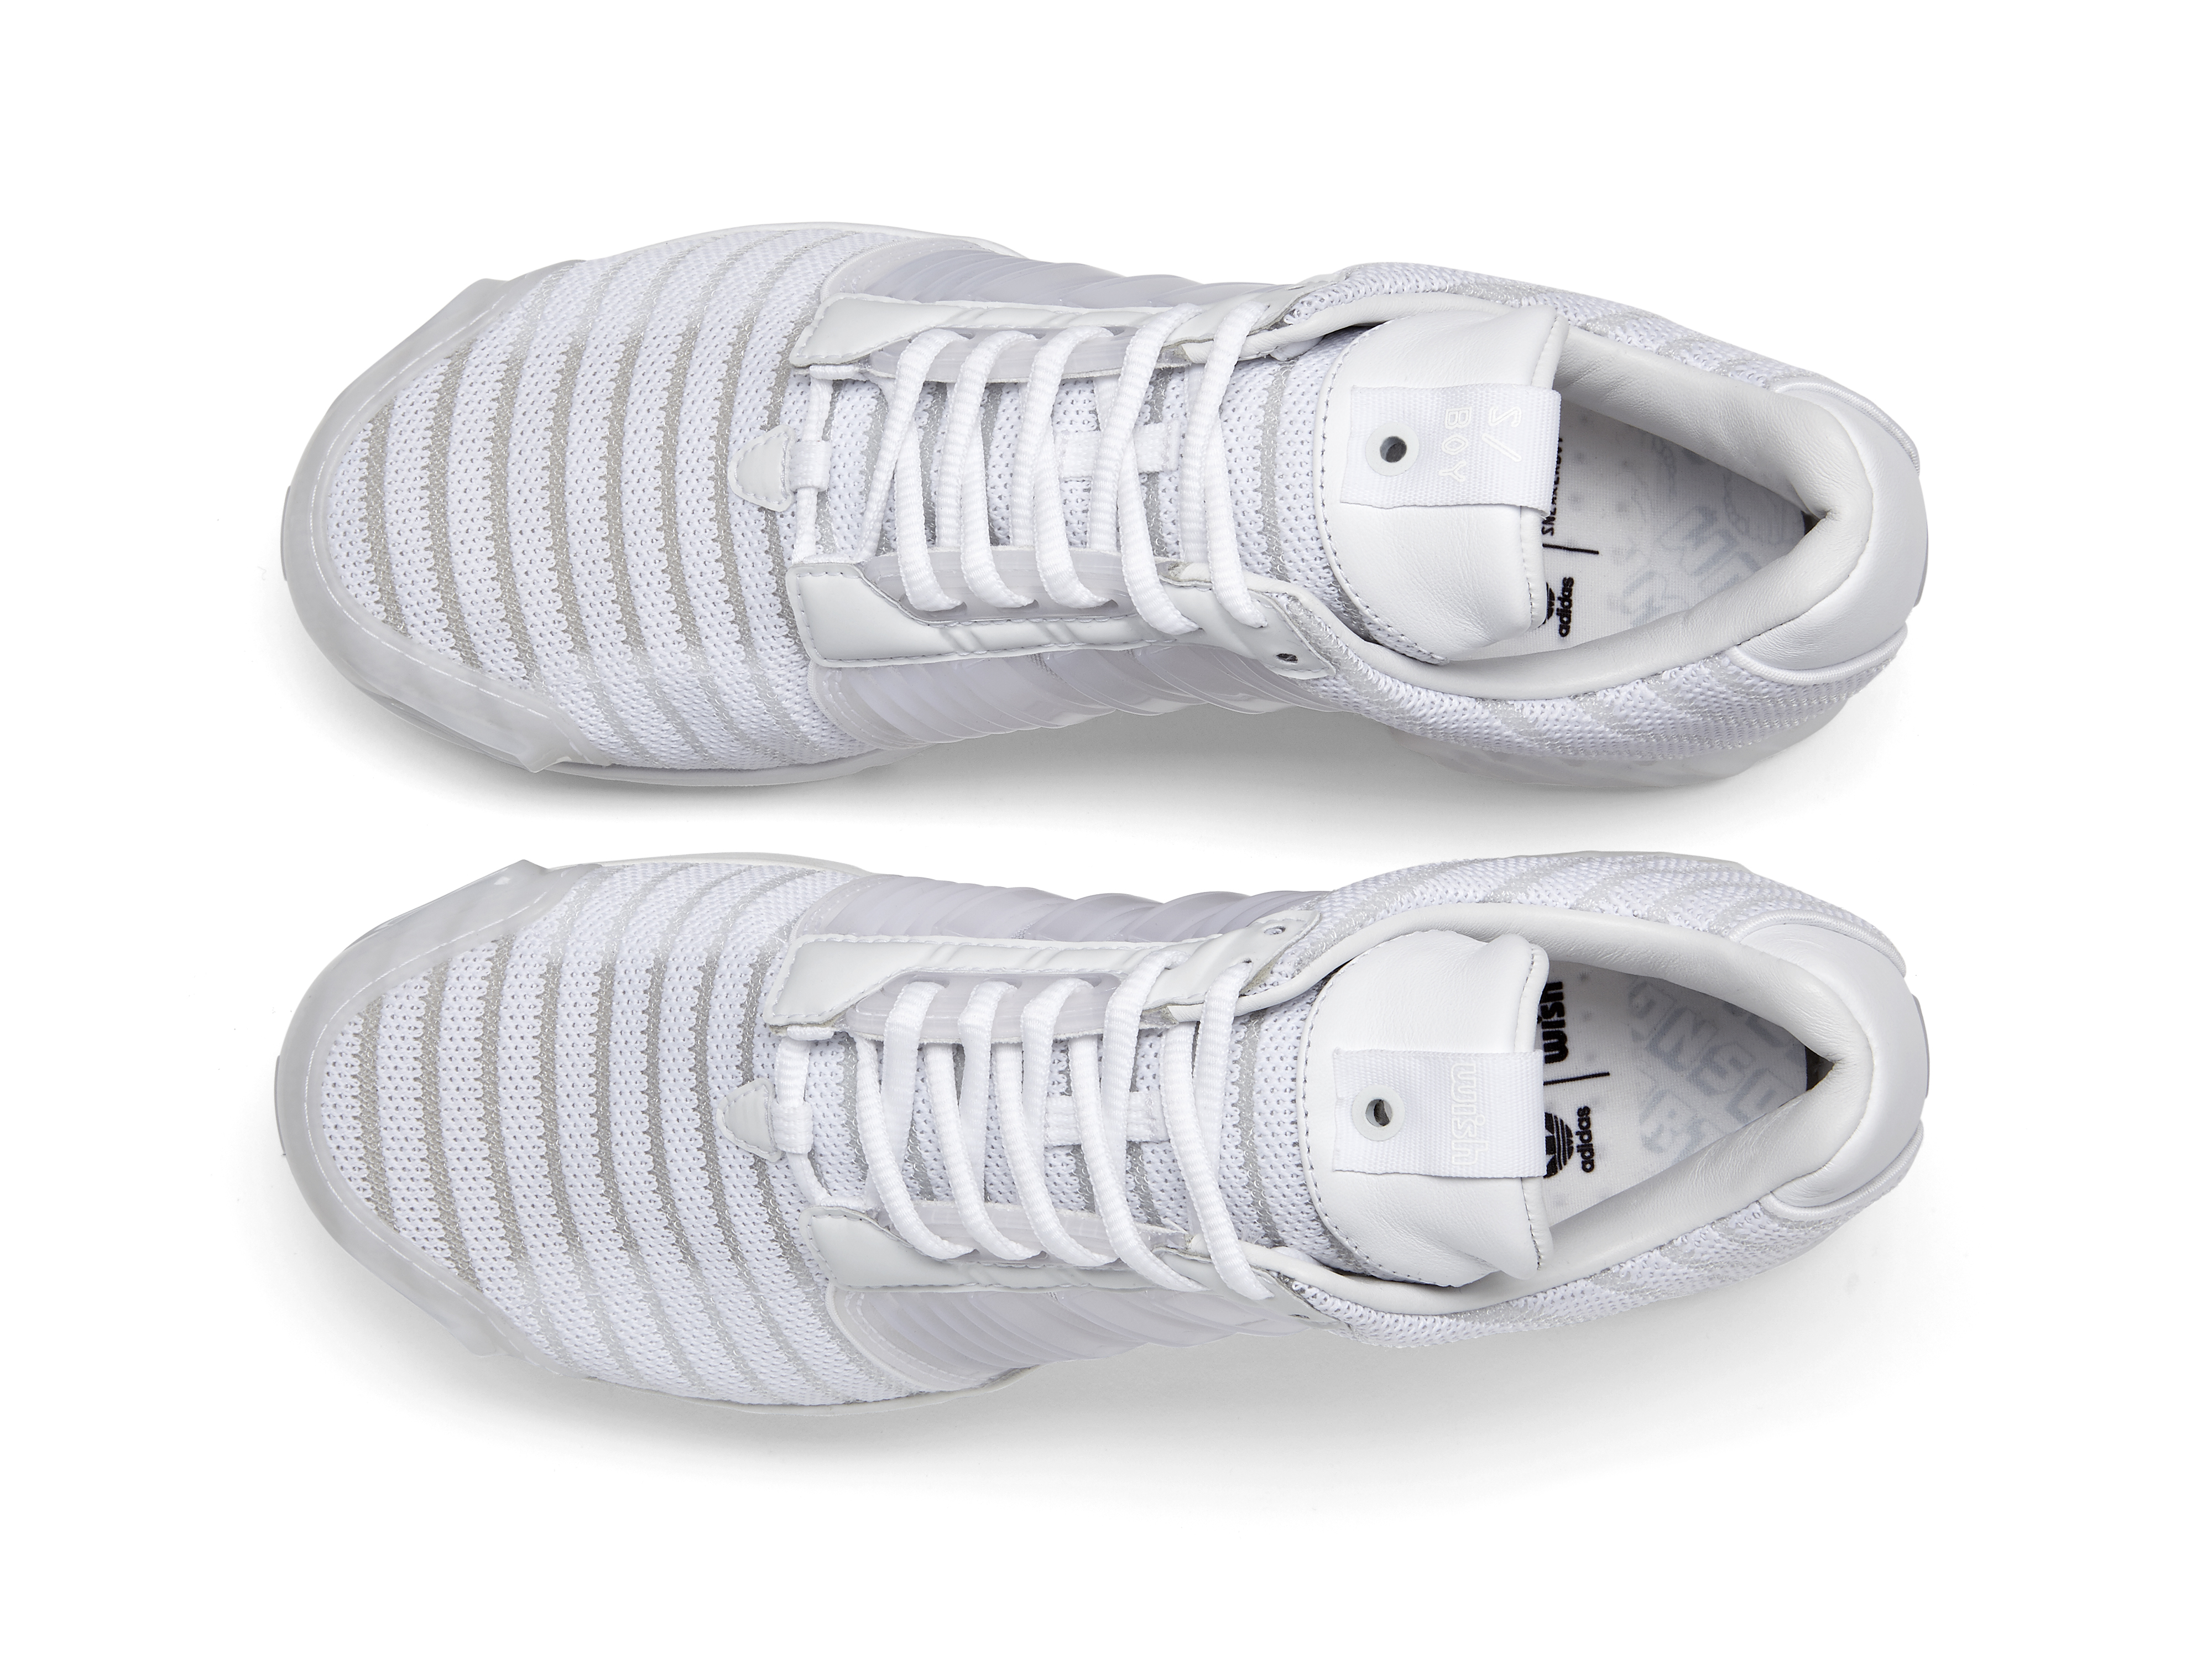 Sneakerboy x Wish x adidas Consortium Collection